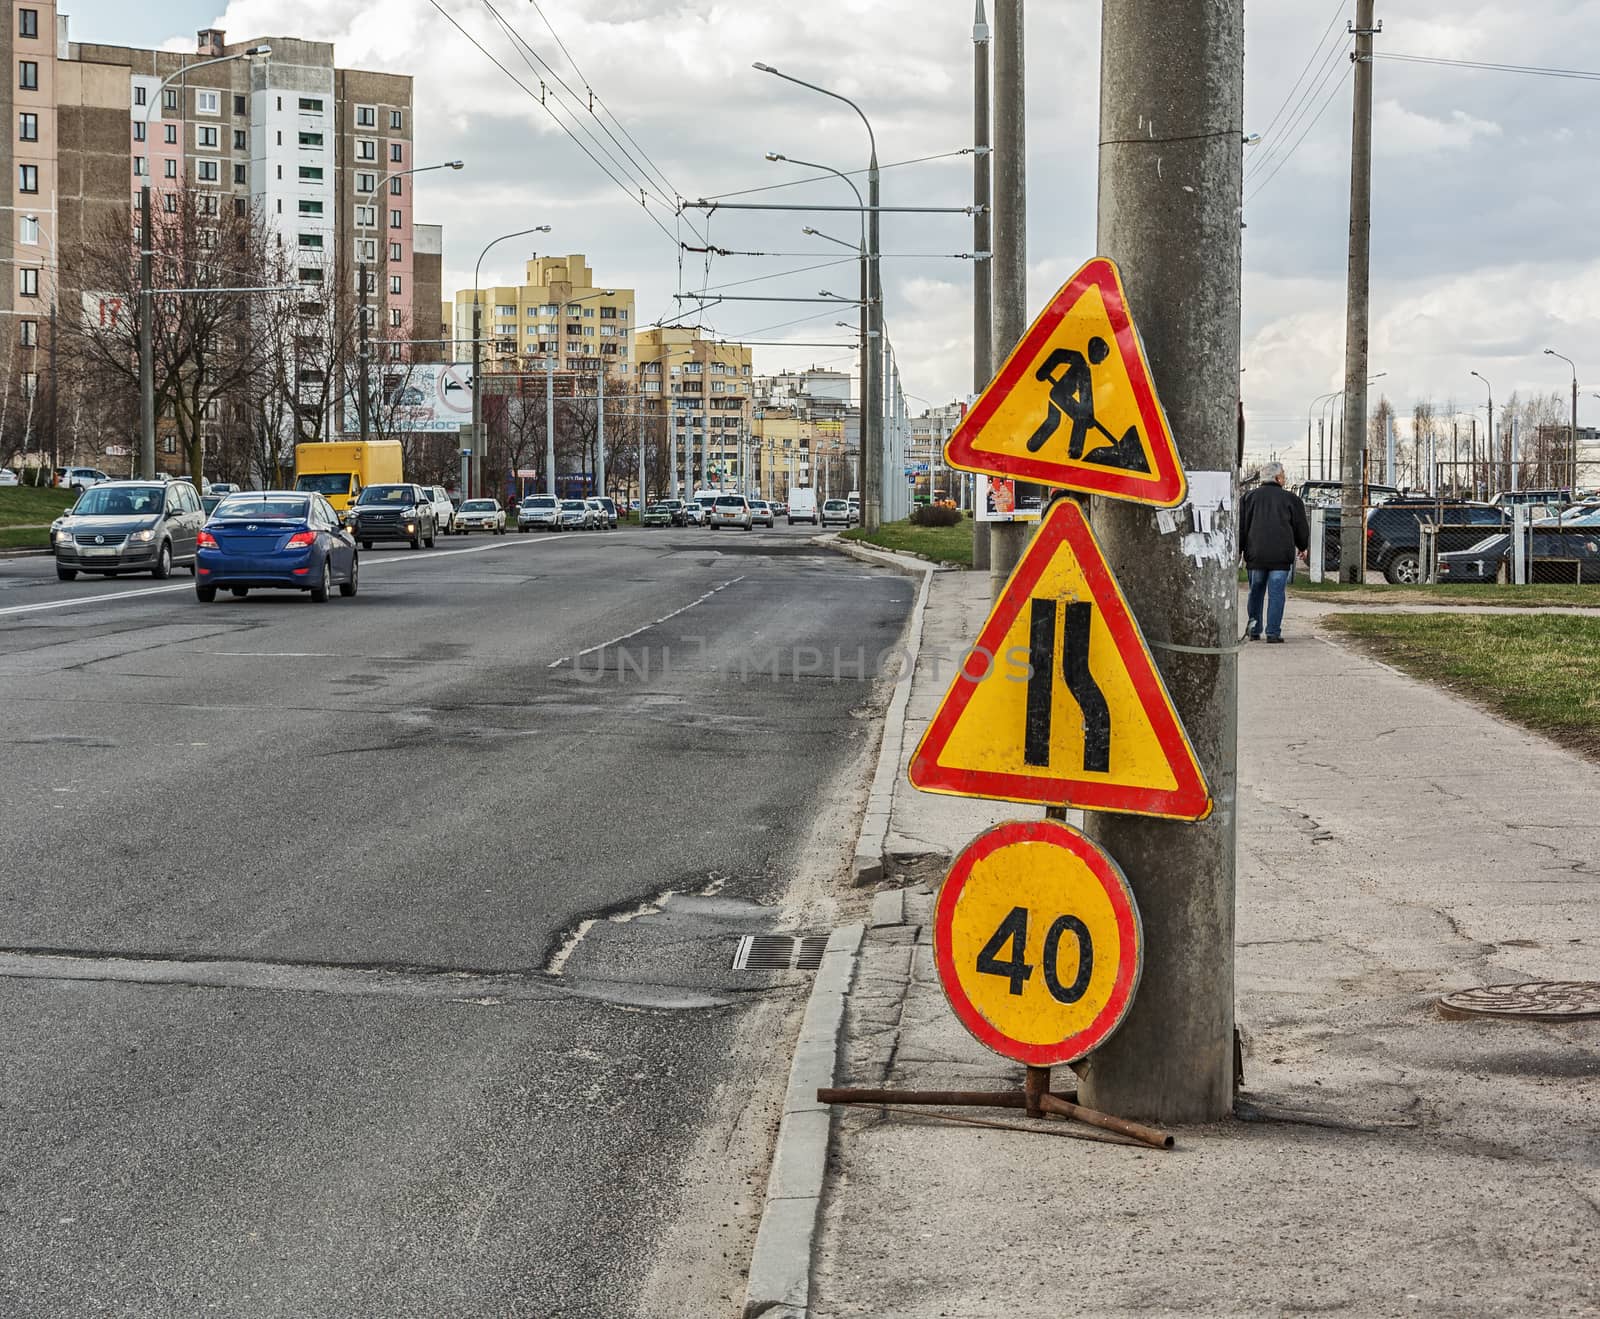 Temporary signs during road repair works by Grommik